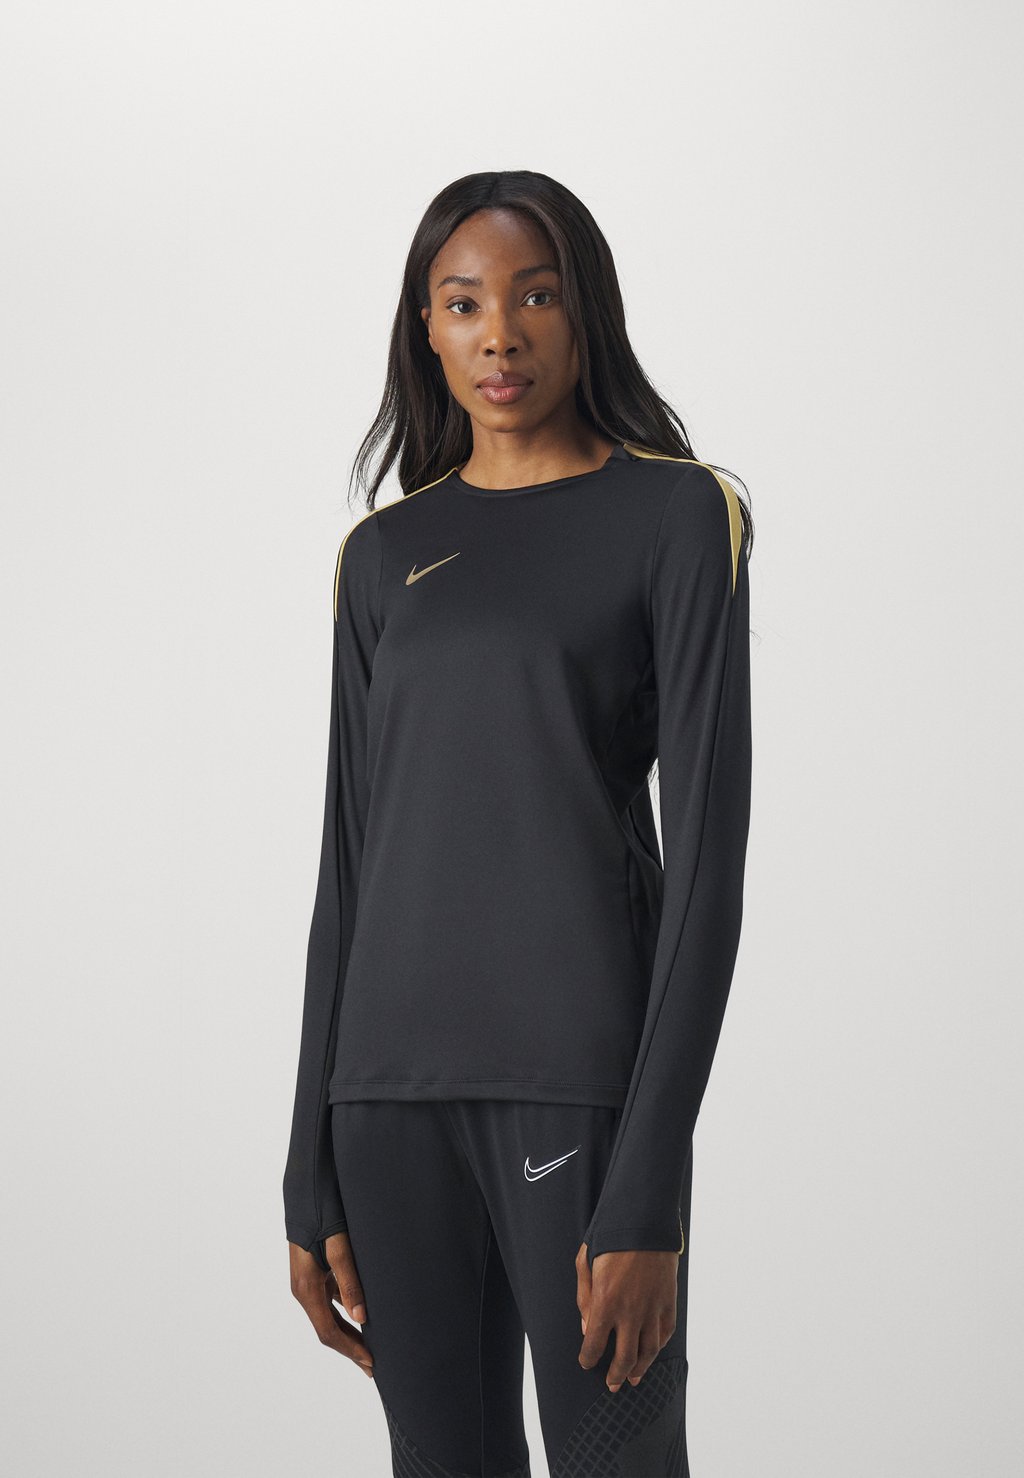 Рубашка с длинным рукавом STRIKE CREW Nike, цвет black/jersey gold/metallic gold